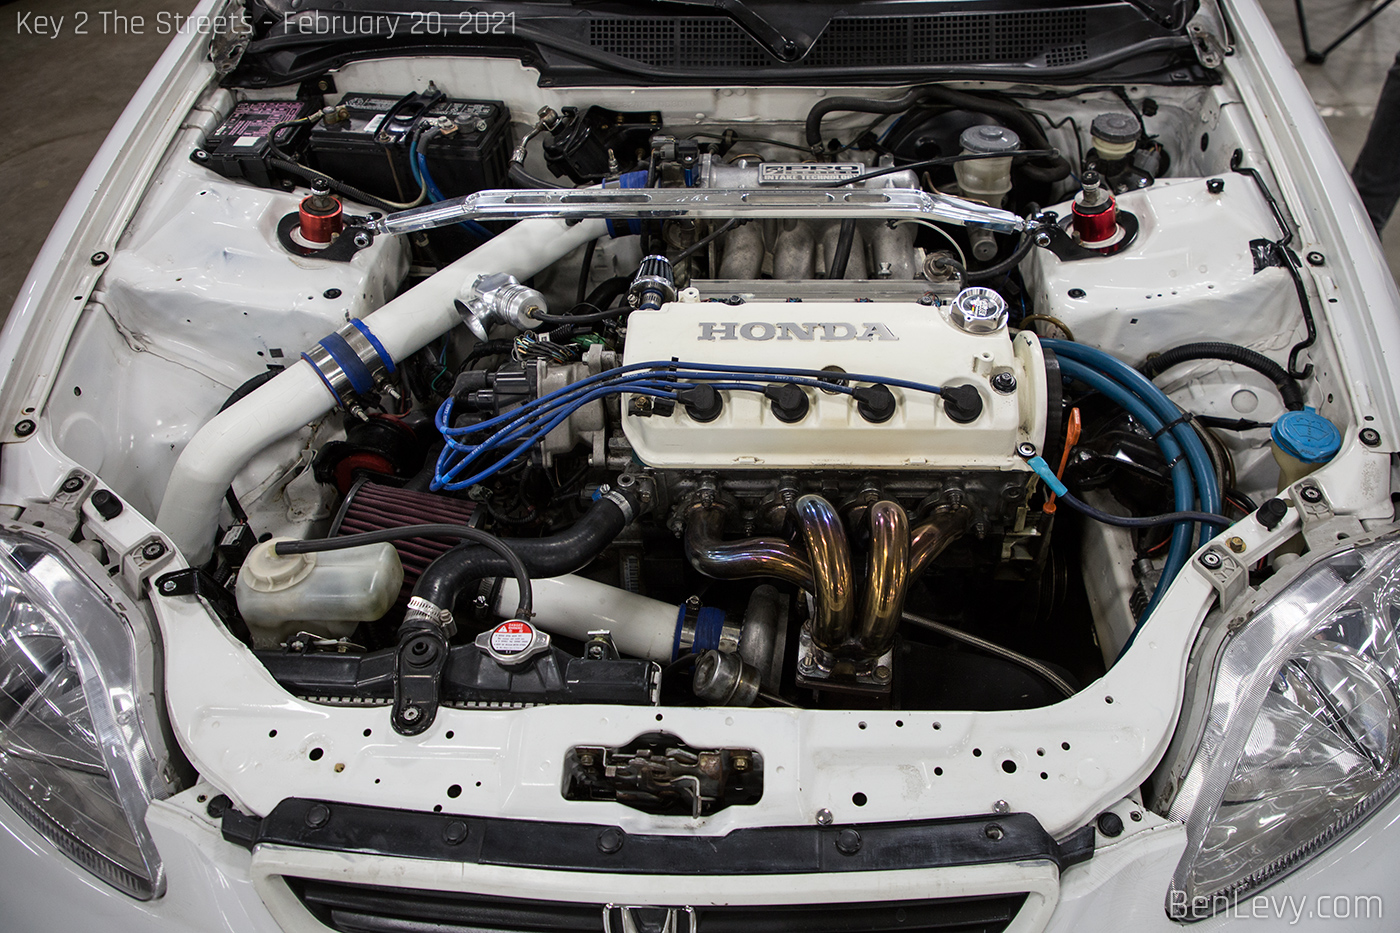 Turbo D Series Engine in Honda Civic